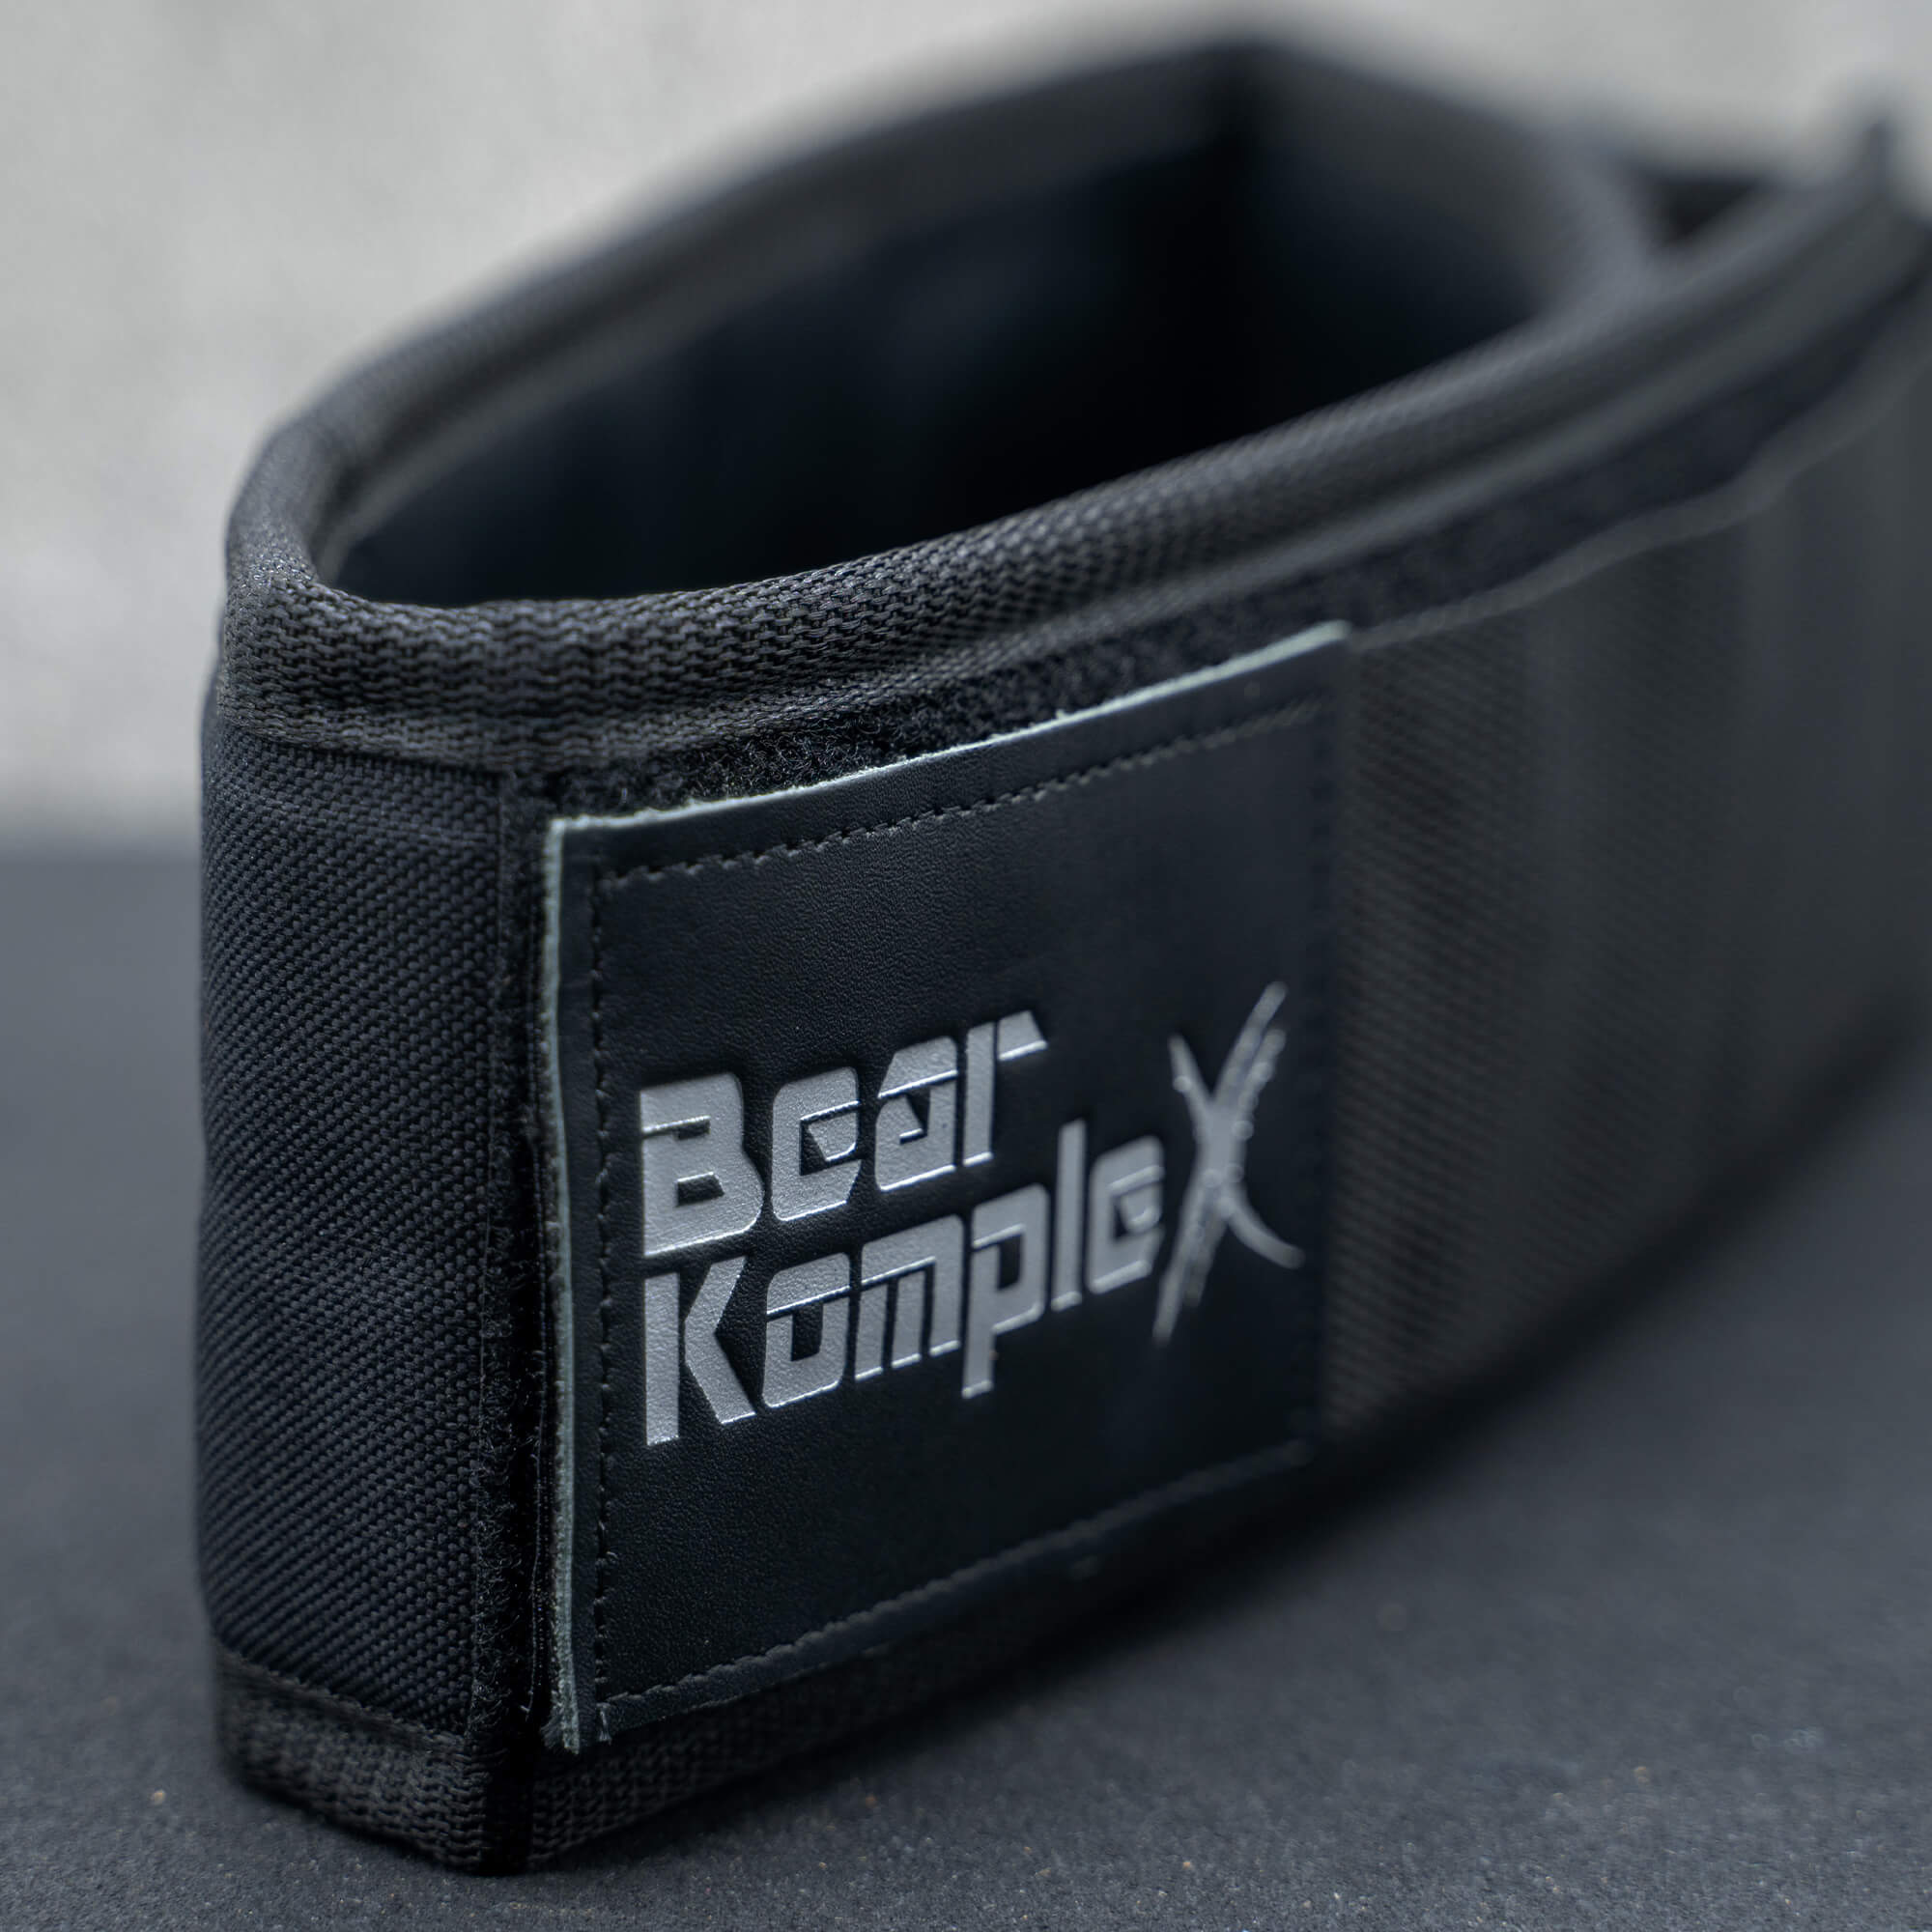 Bear KompleX APEX Premium Leather Weight Lifting Belt